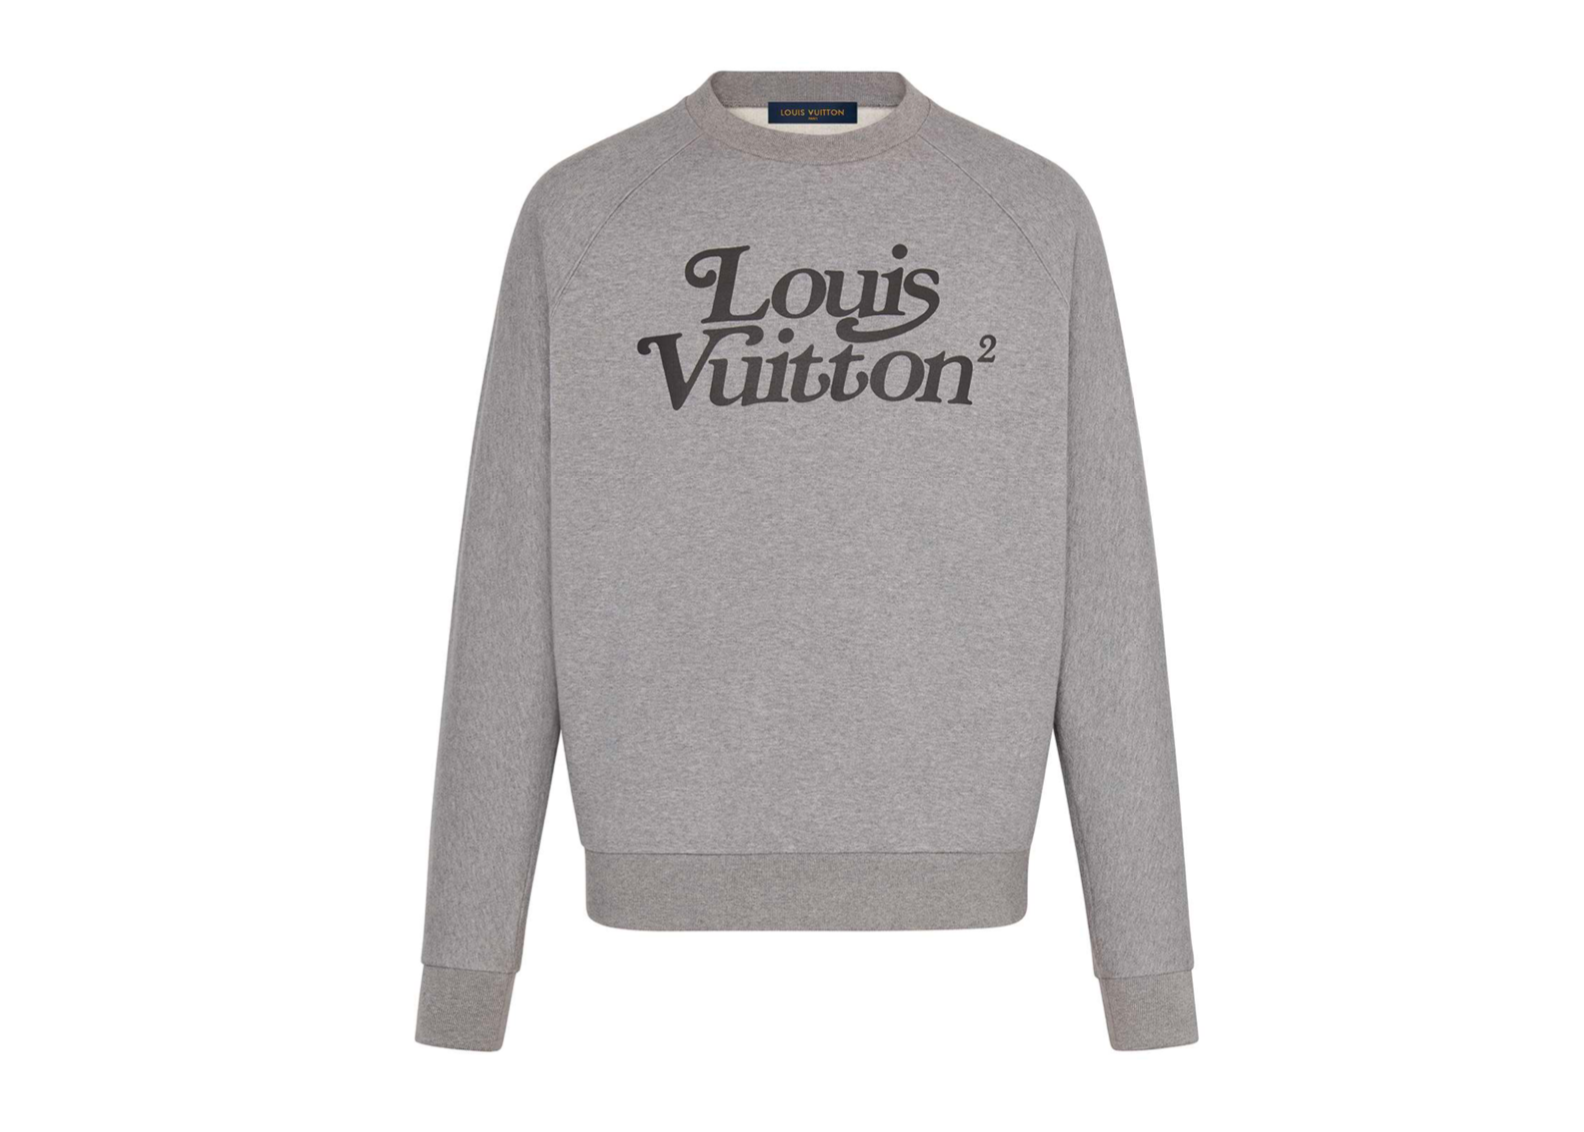 Louis Vuitton 2 collect Tshirt  Luxury High Fashion 新山  Facebook